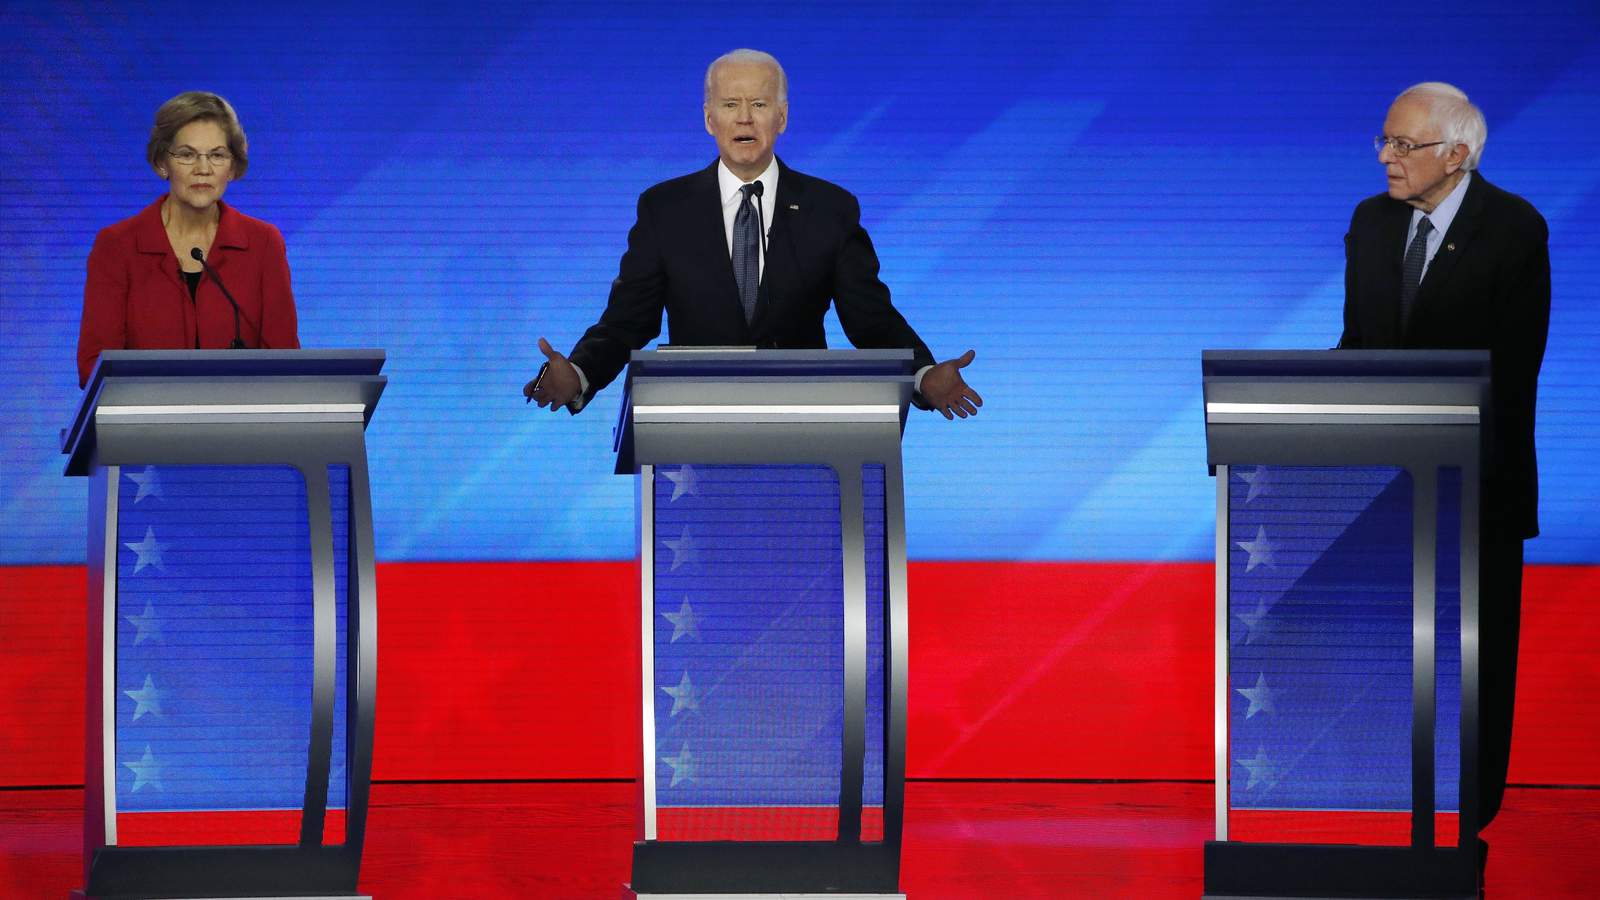 Sanders, Warren under scrutiny as Biden weighs Cabinet picks